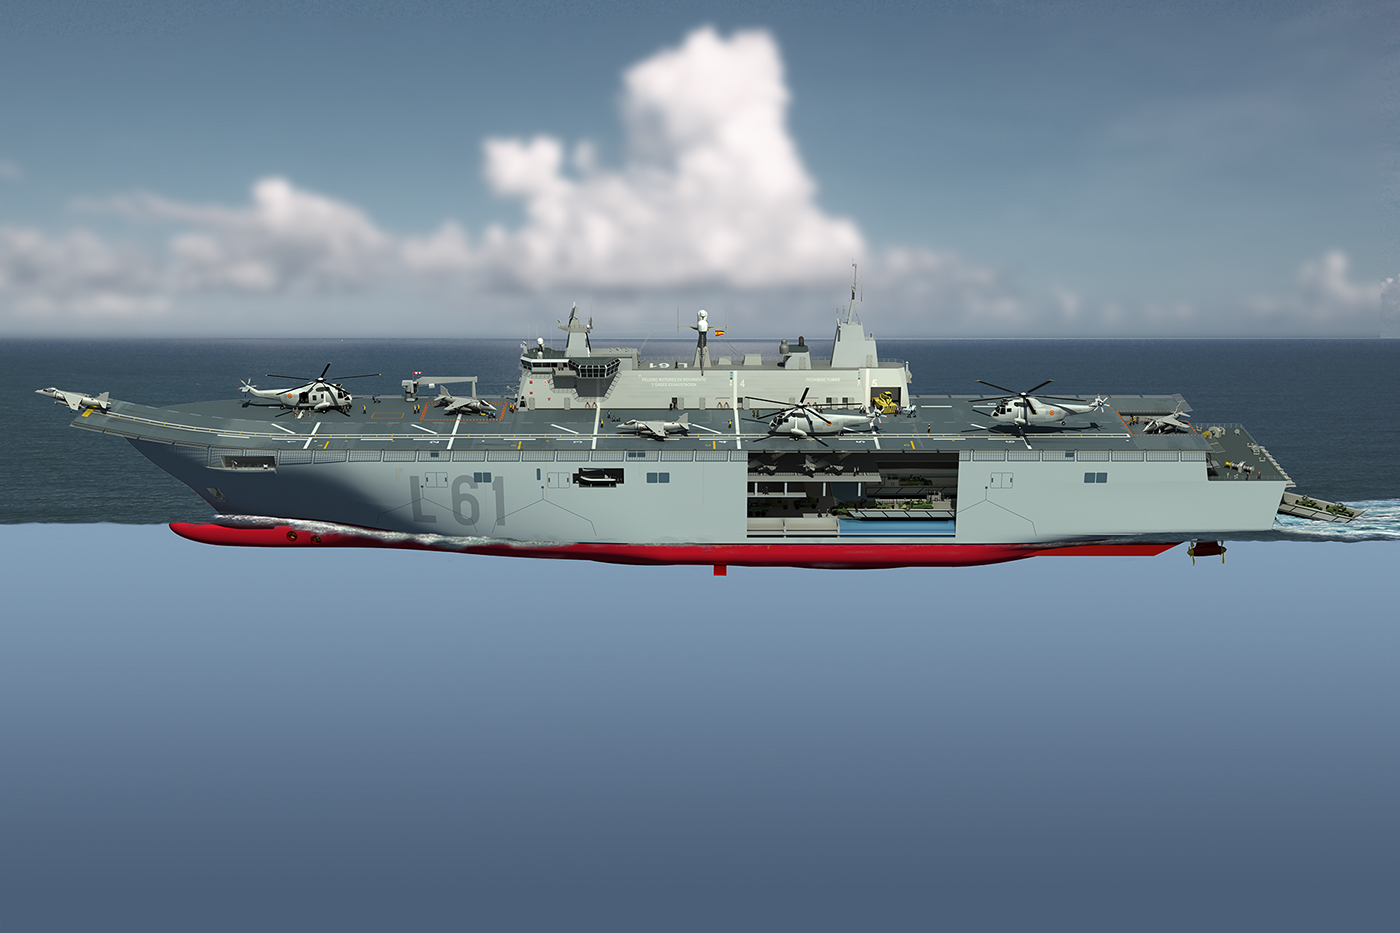 LHD L61 navy navy Armada española